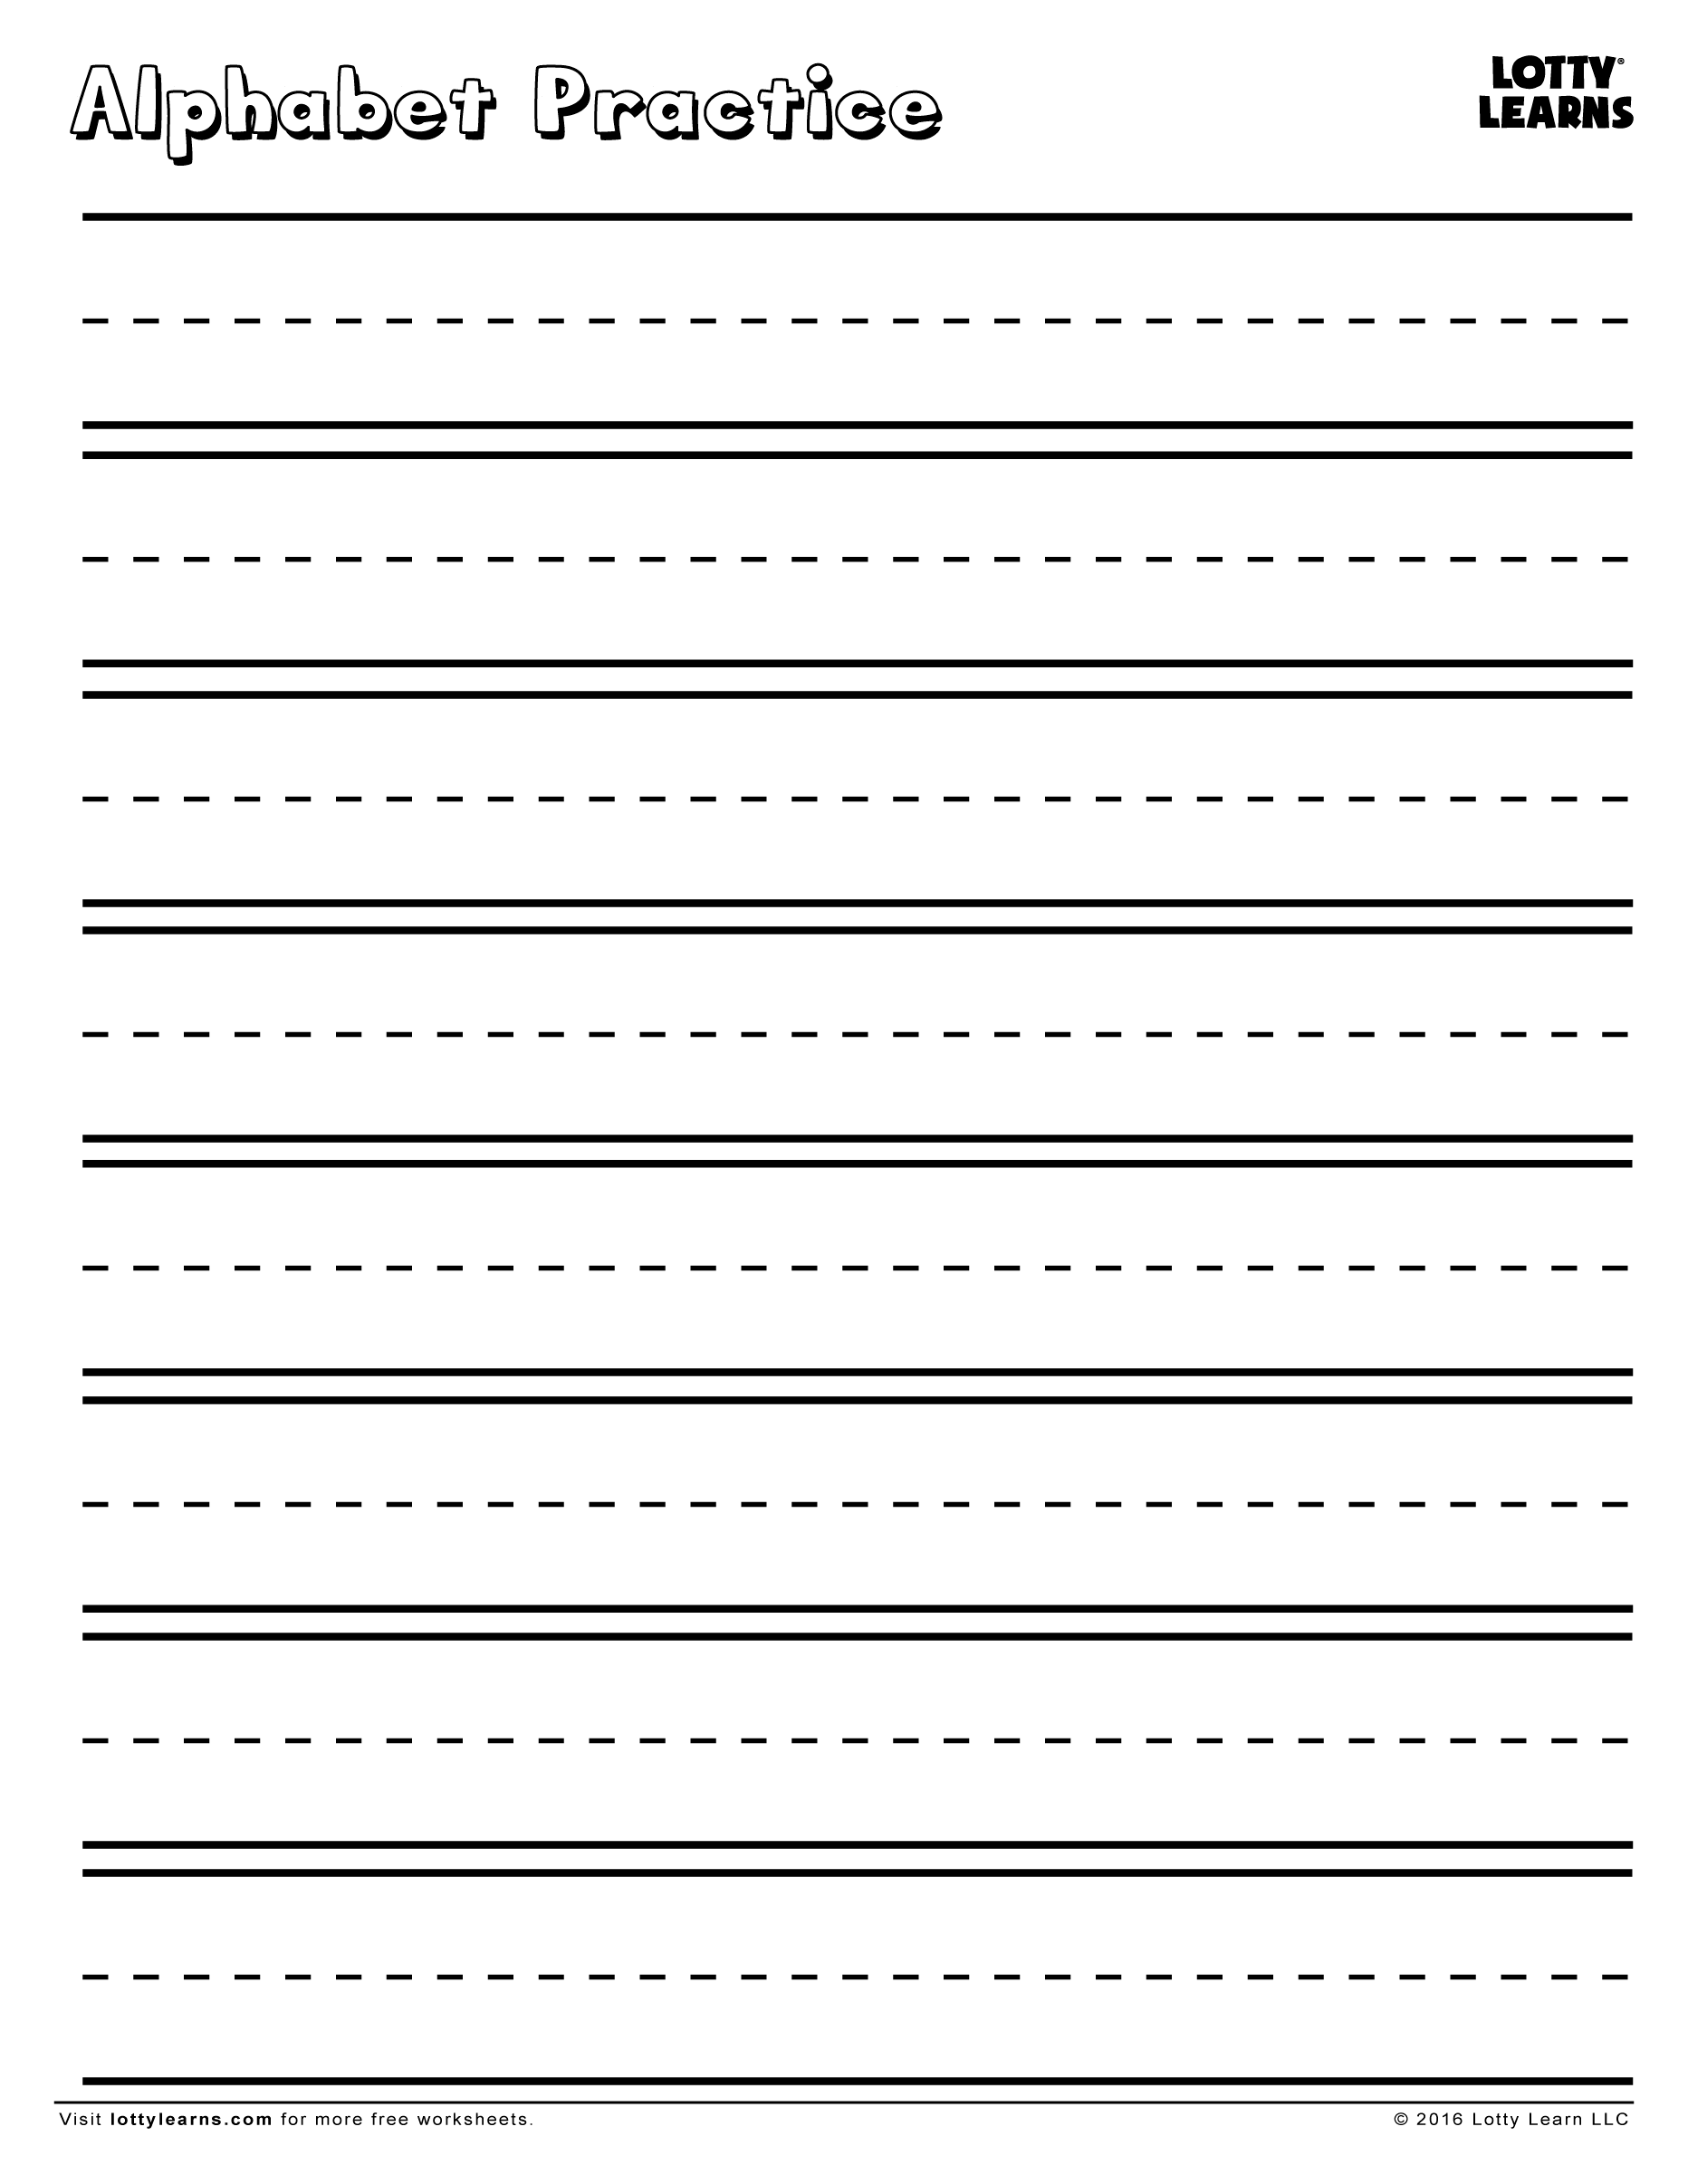 Practice Makes Perfect! Blank Alphabet Practice Sheet